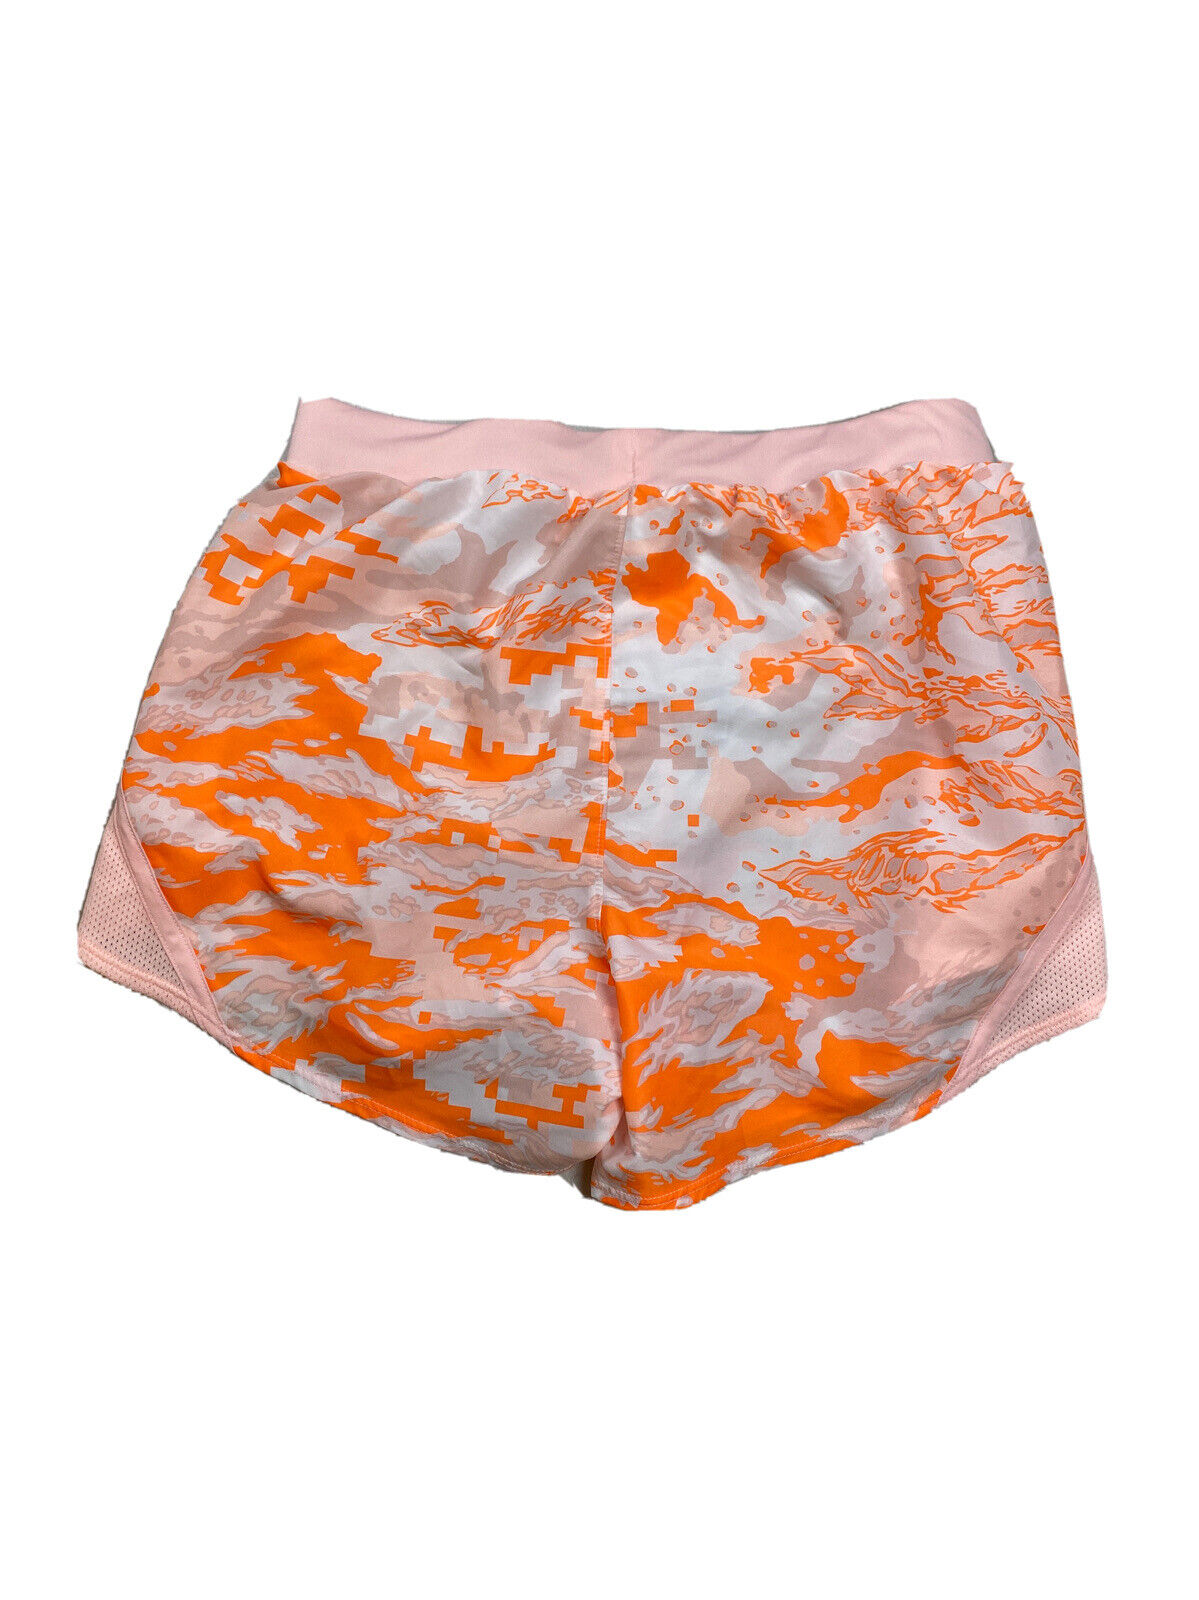 Under Armour Women's Orange Geometric Lined HeatGear Running Shorts - XS